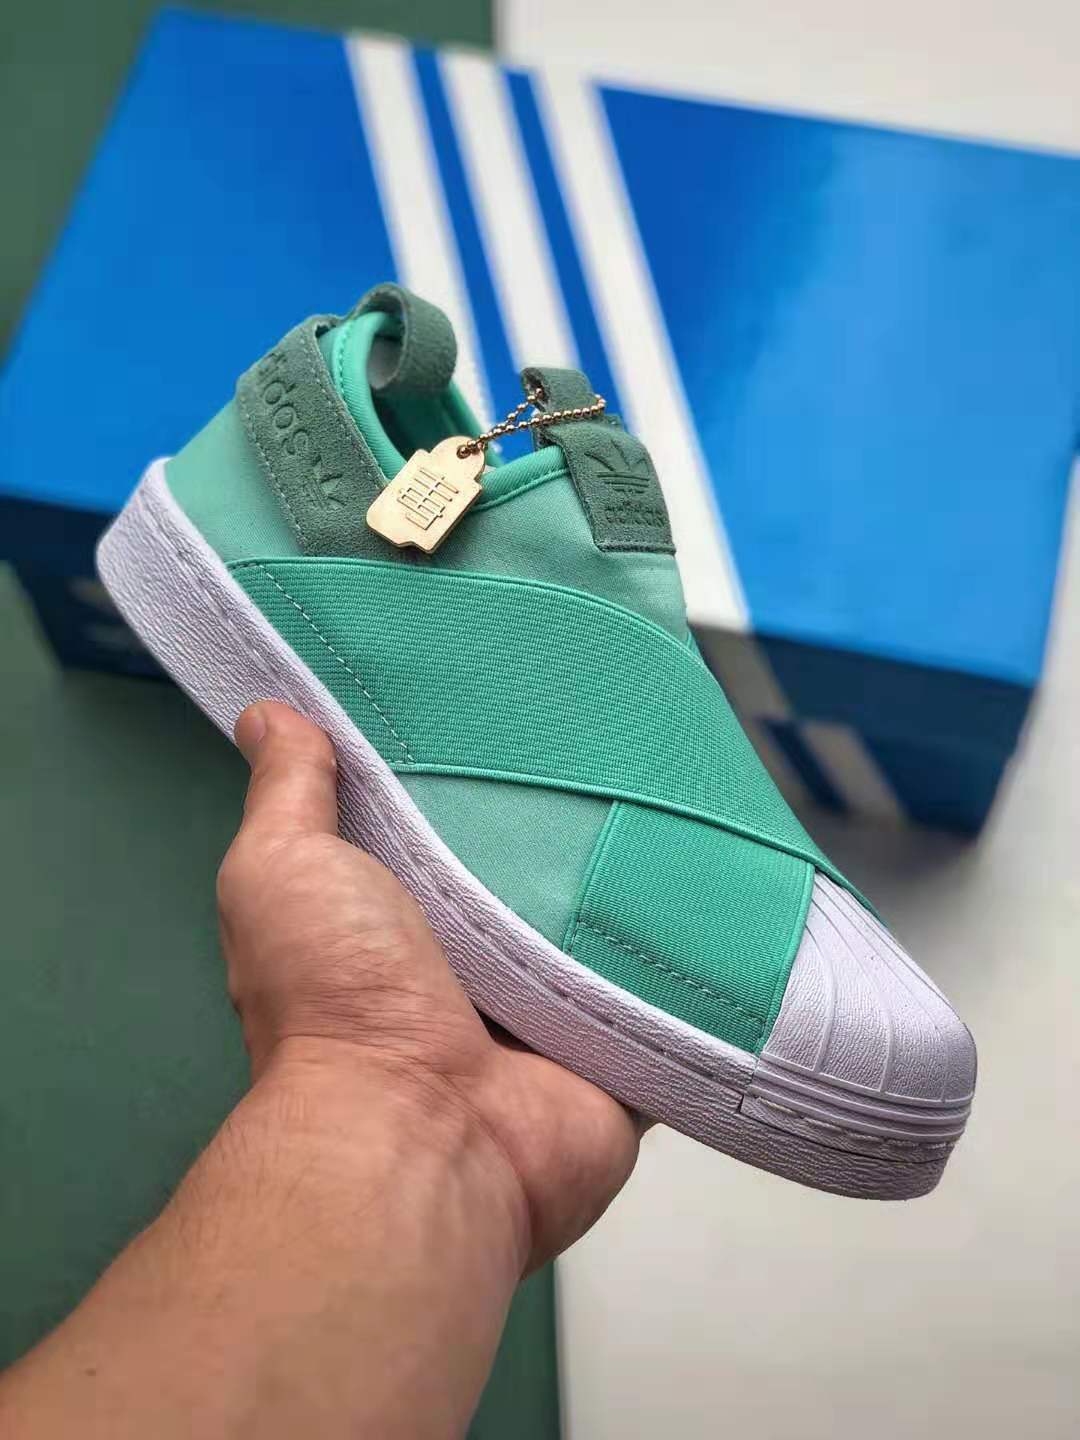 Adidas Originals Superstar Slip-on Green S76407: Stylish and Comfortable Footwear